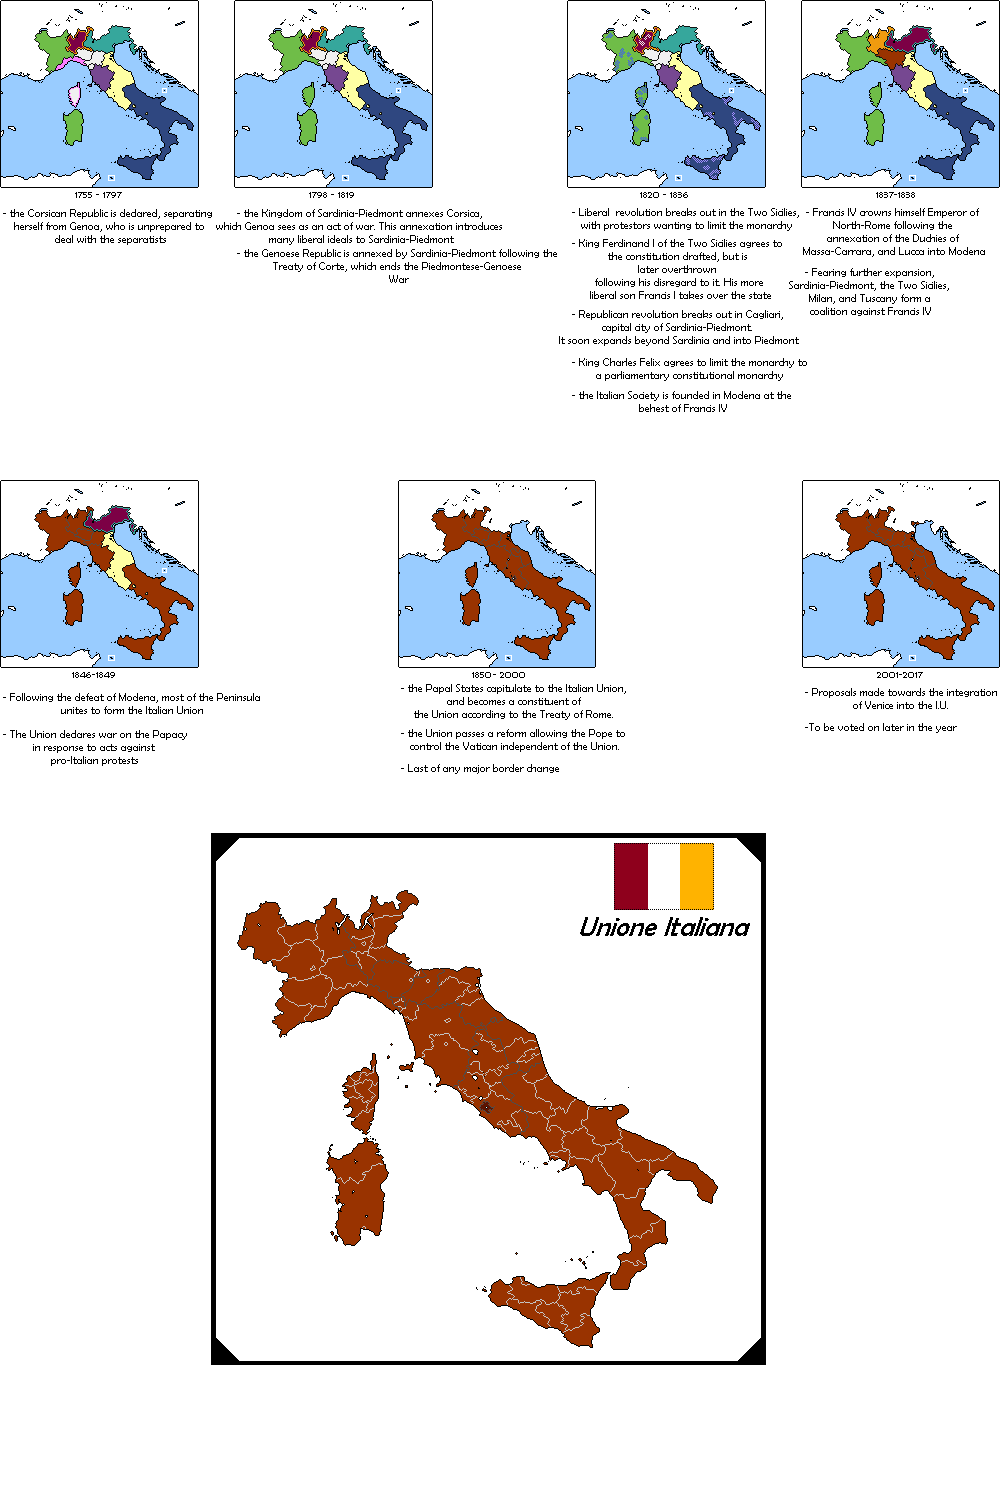 Italian Union.png